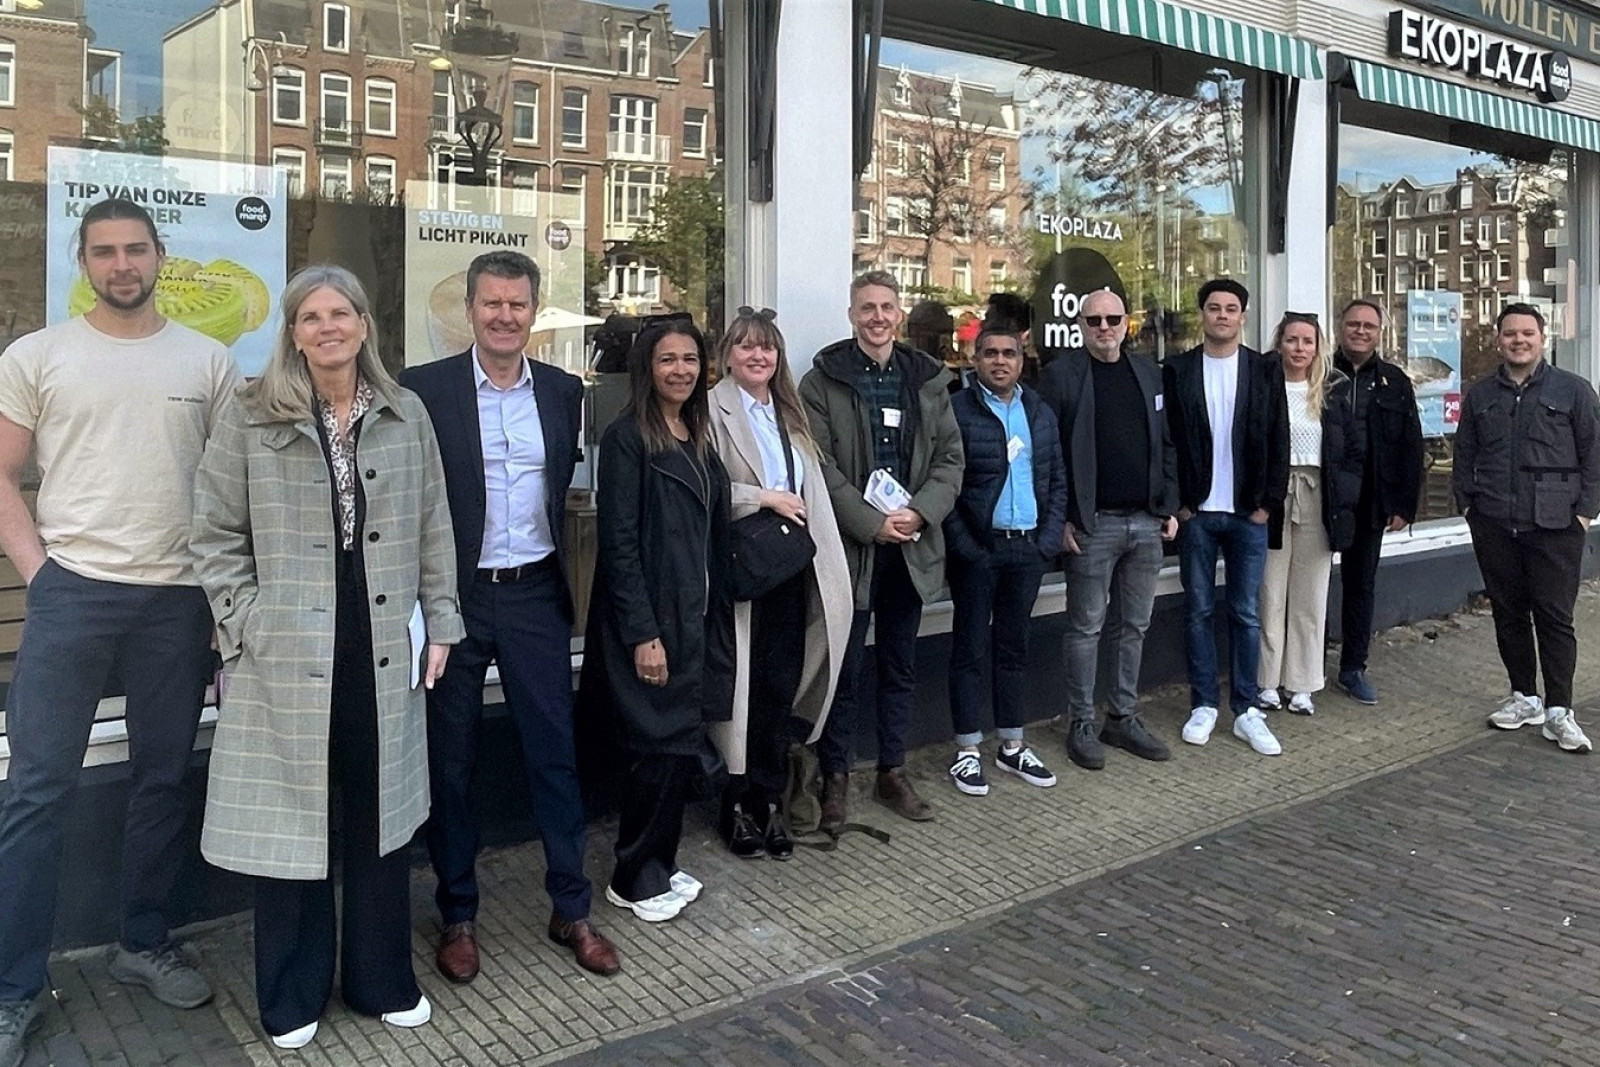 De danske udstillere foran Ekoplaza-butik i Amsterdam